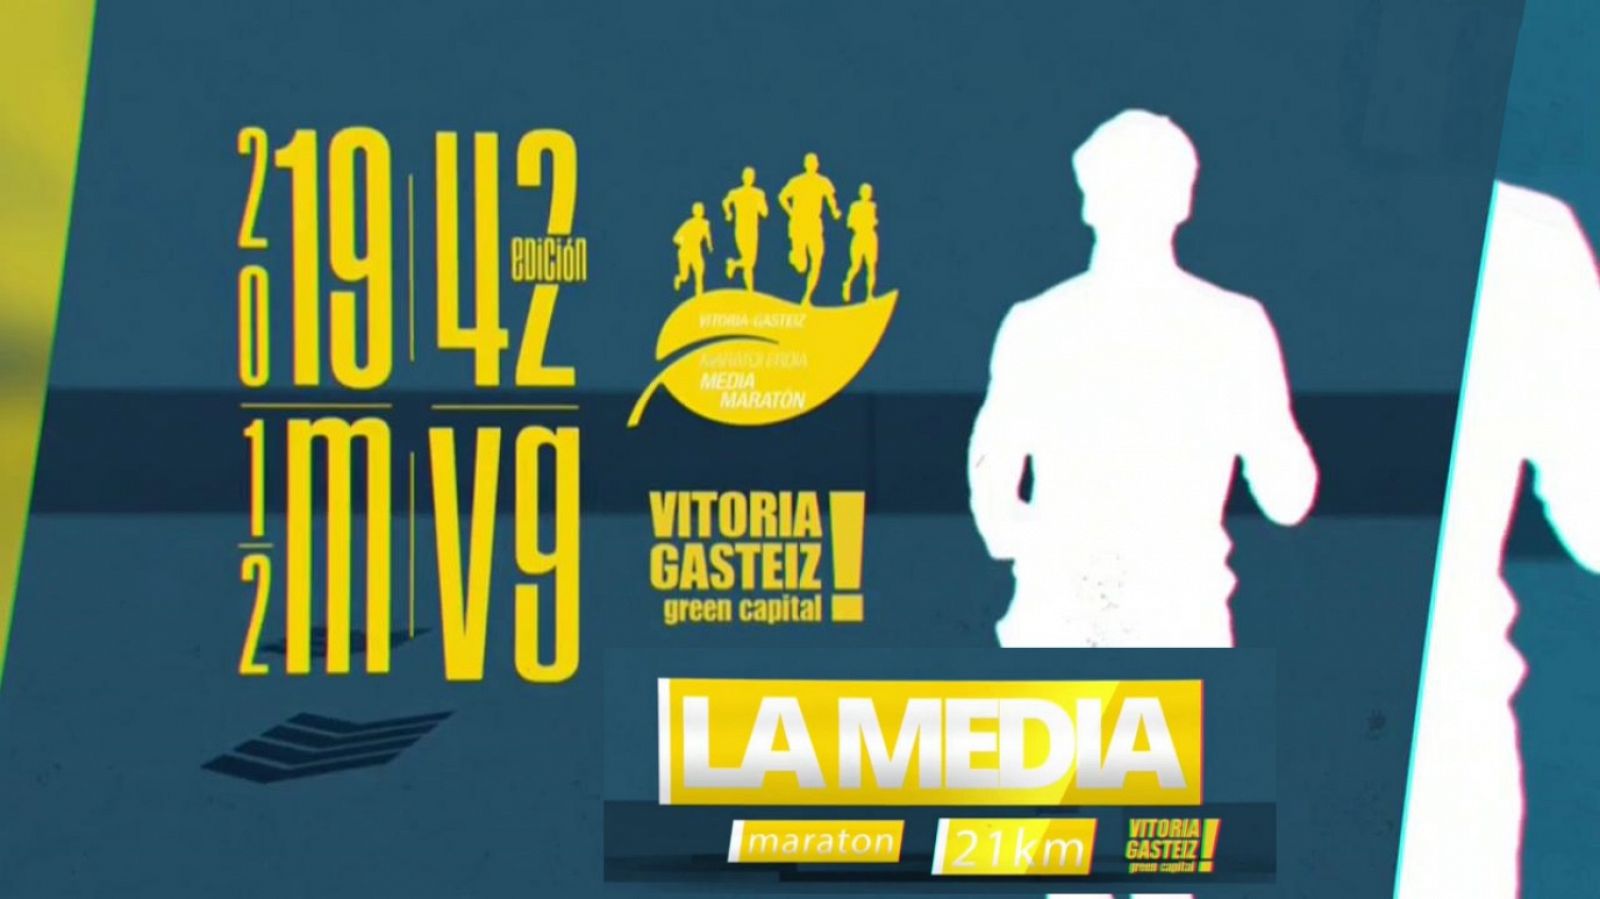 Atletismo - Media Maratón Vitoria-Gasteiz 2019 - RTVE.es